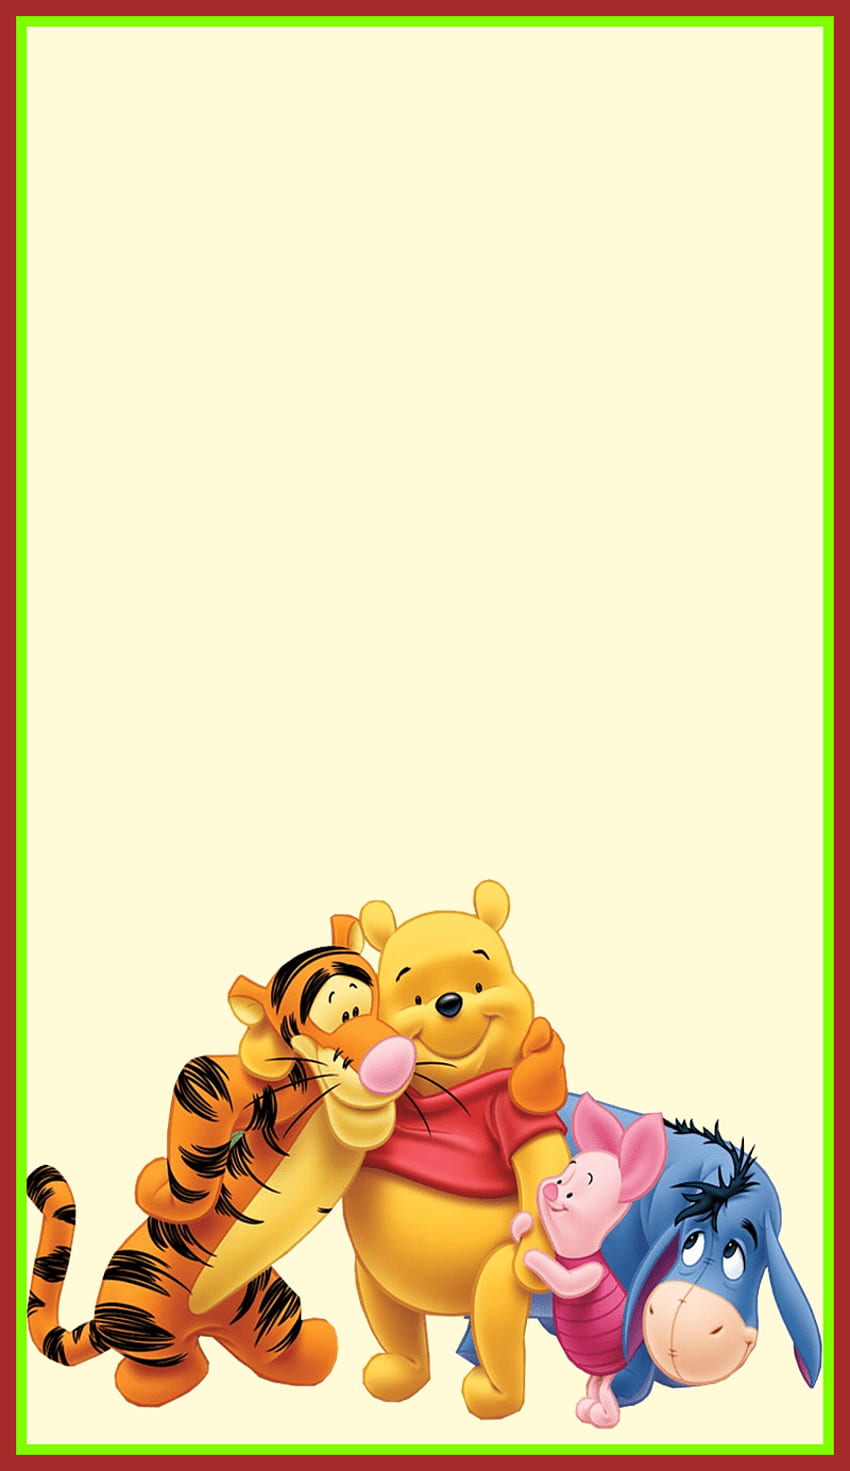 Wallpaper ID 483002  TV Show Winnie The Pooh Phone Wallpaper  720x1280  free download